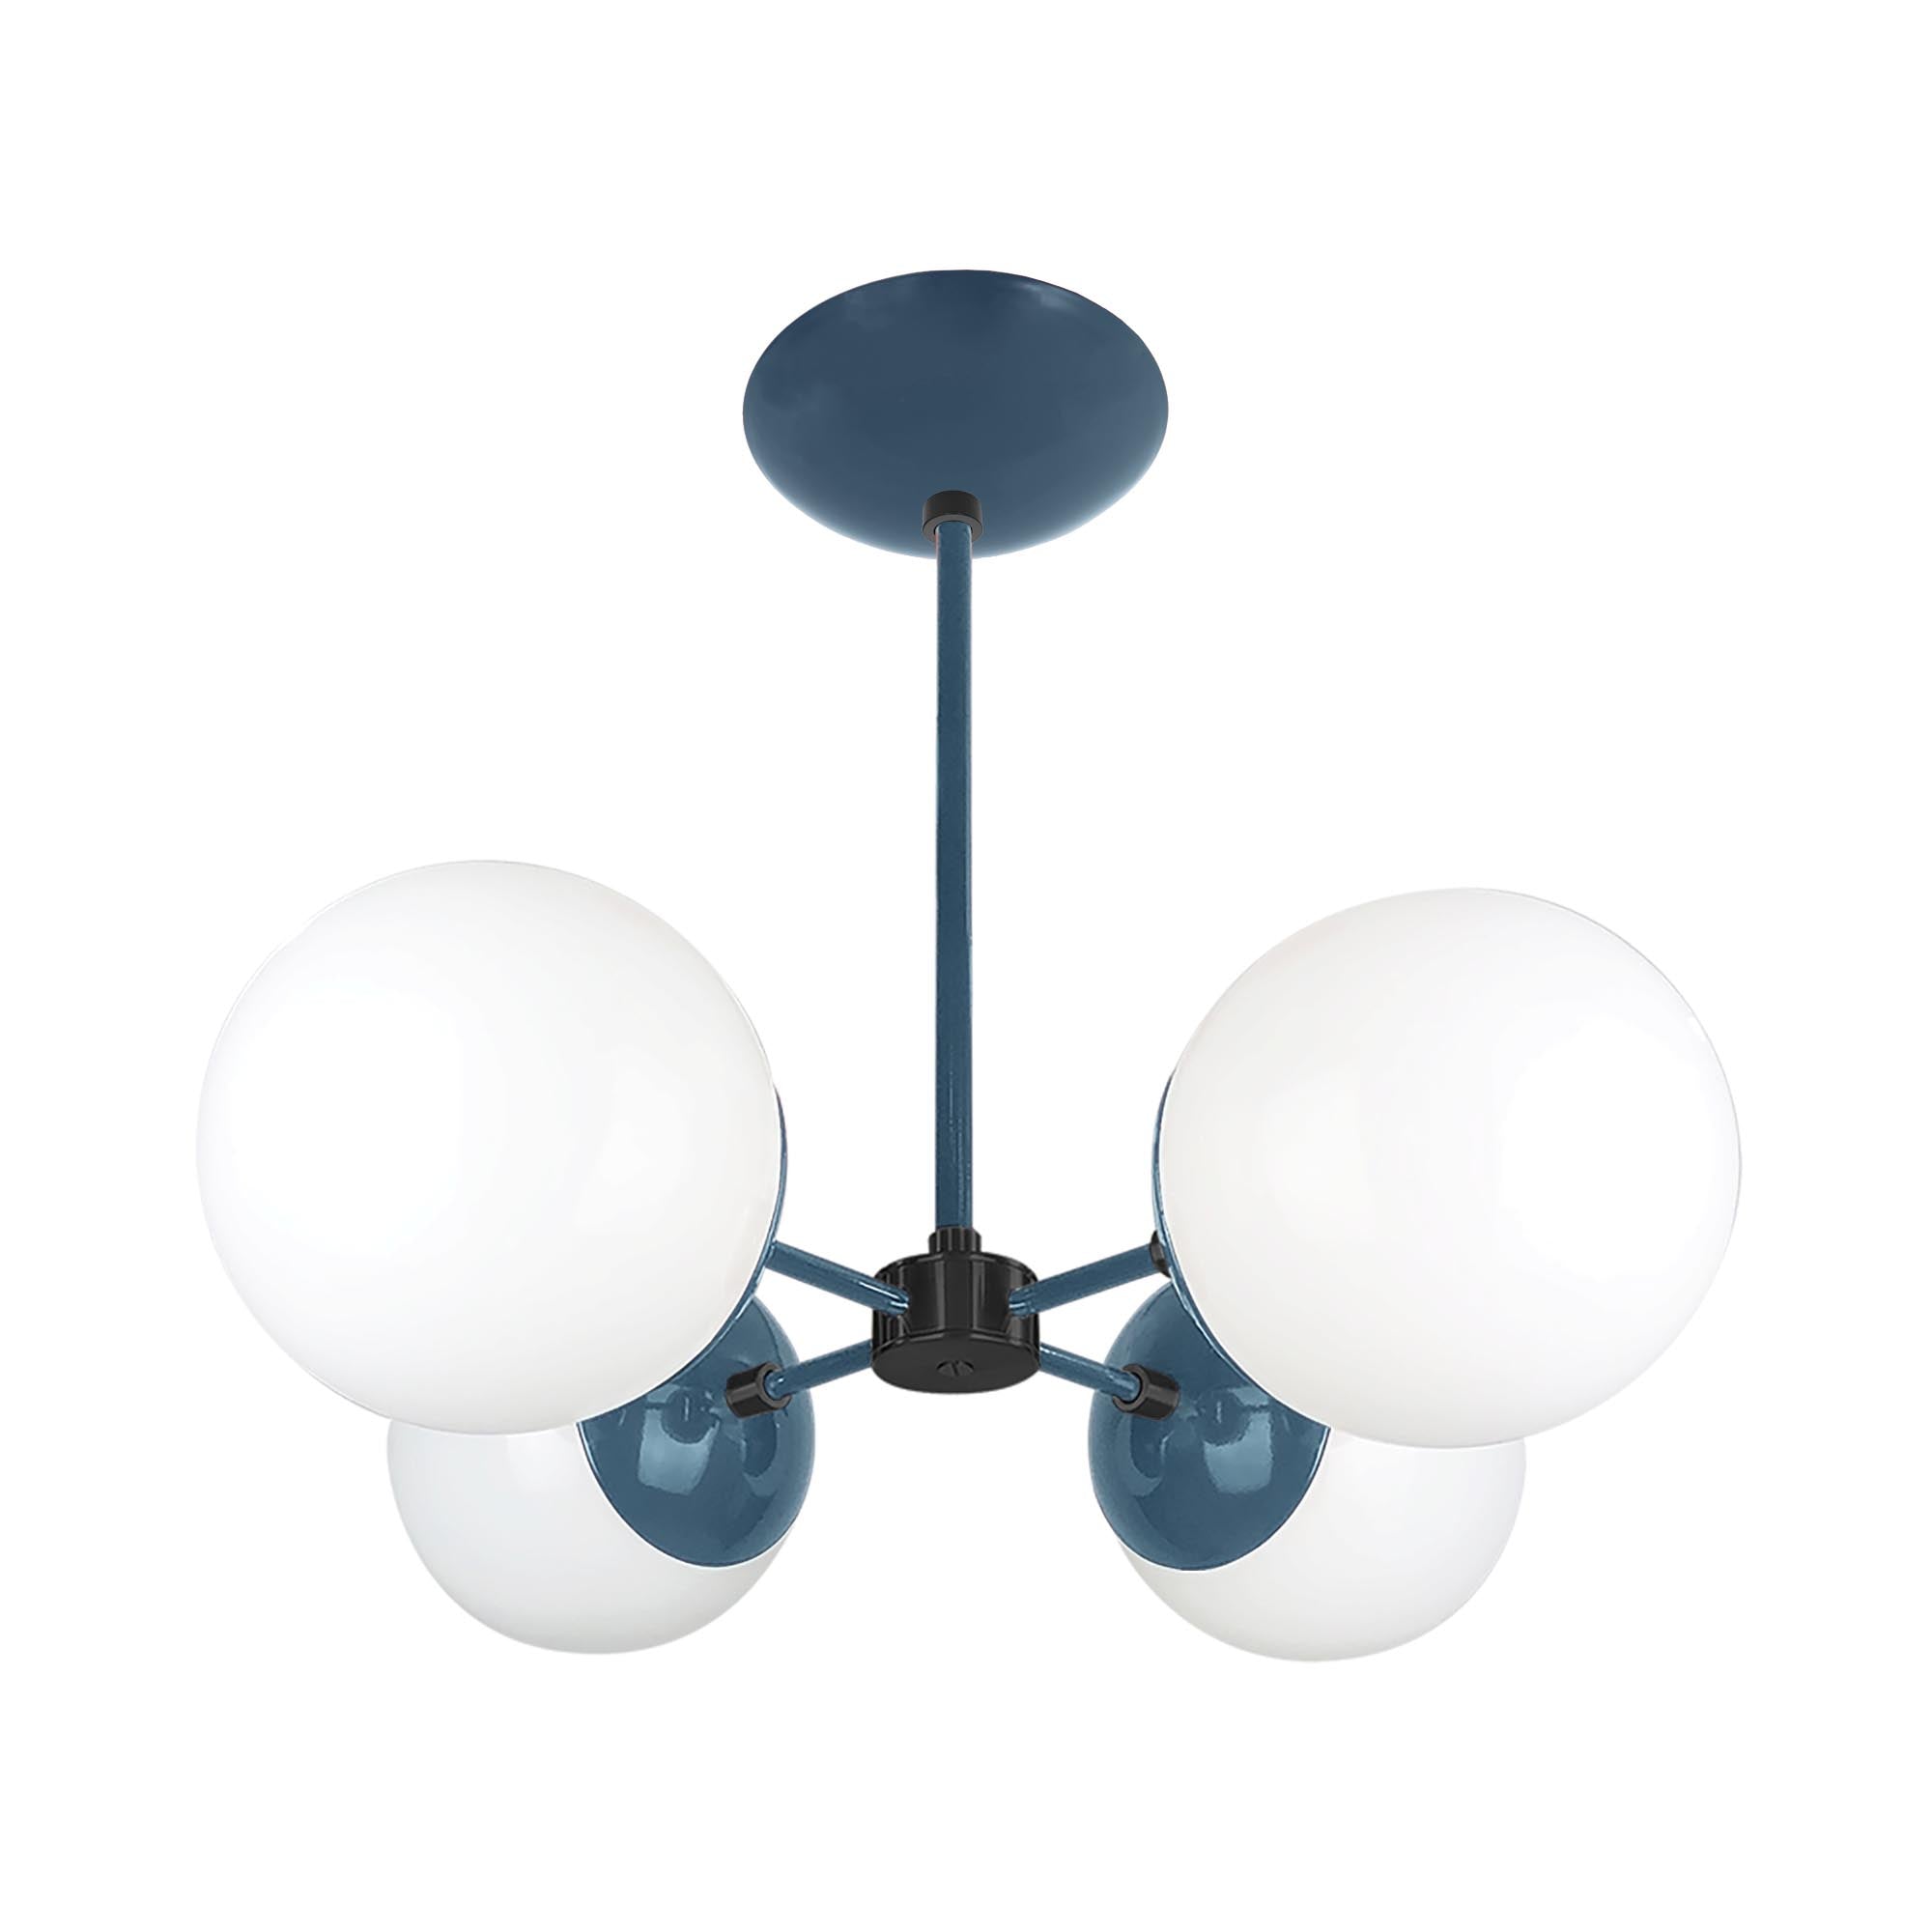 Black and slate blue color Orbi chandelier Dutton Brown lighting